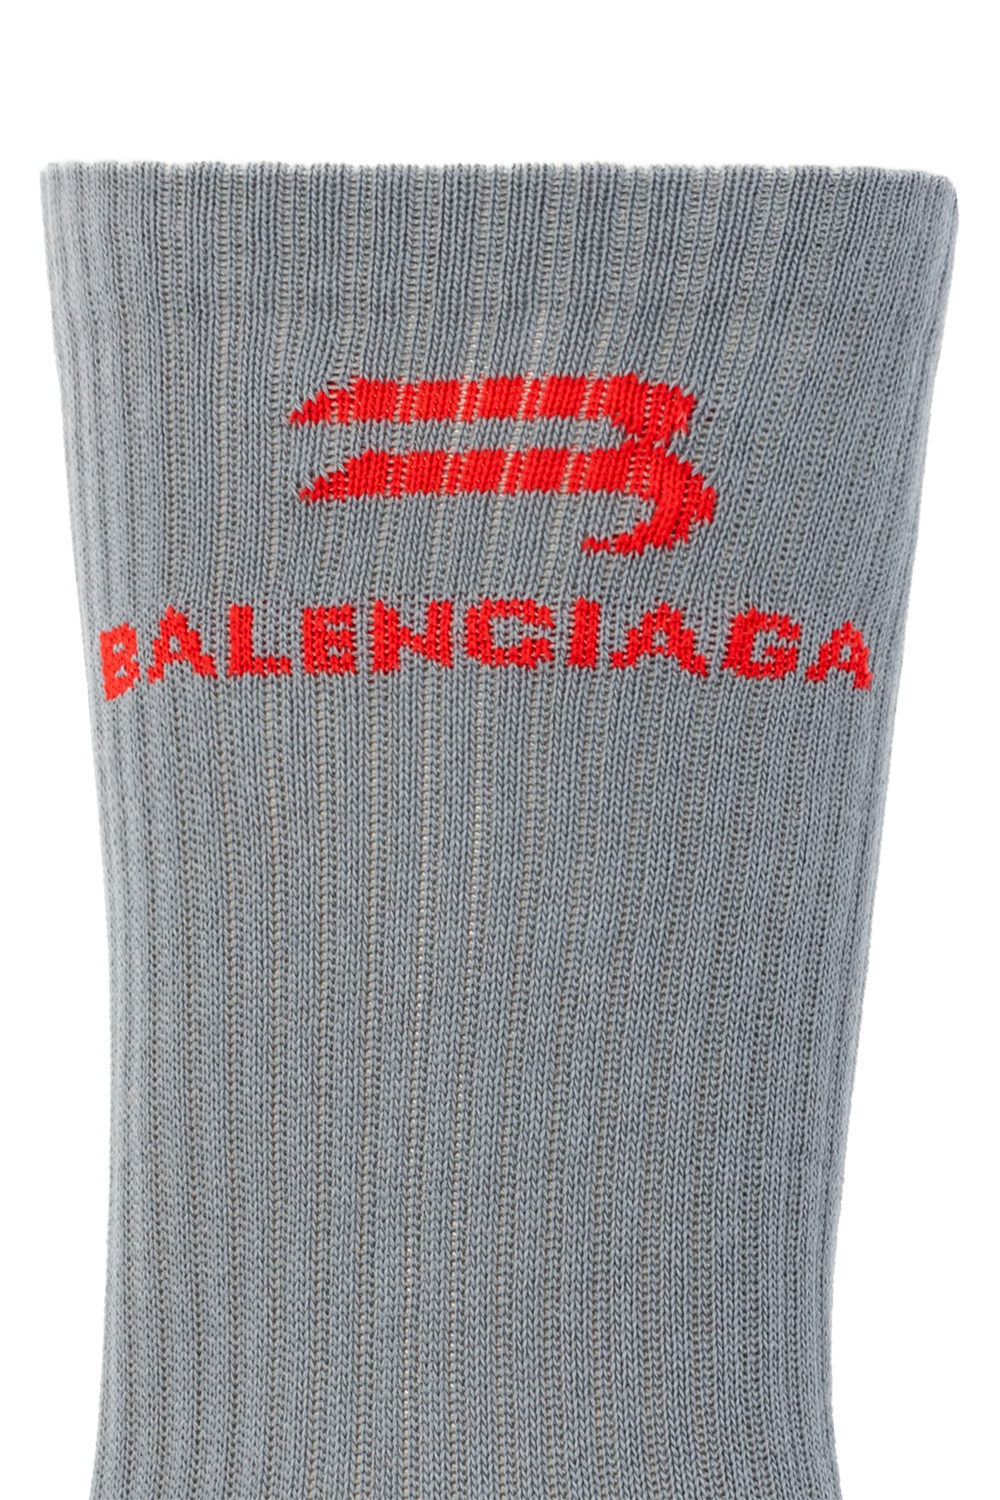 Balenciaga Boots / wellies